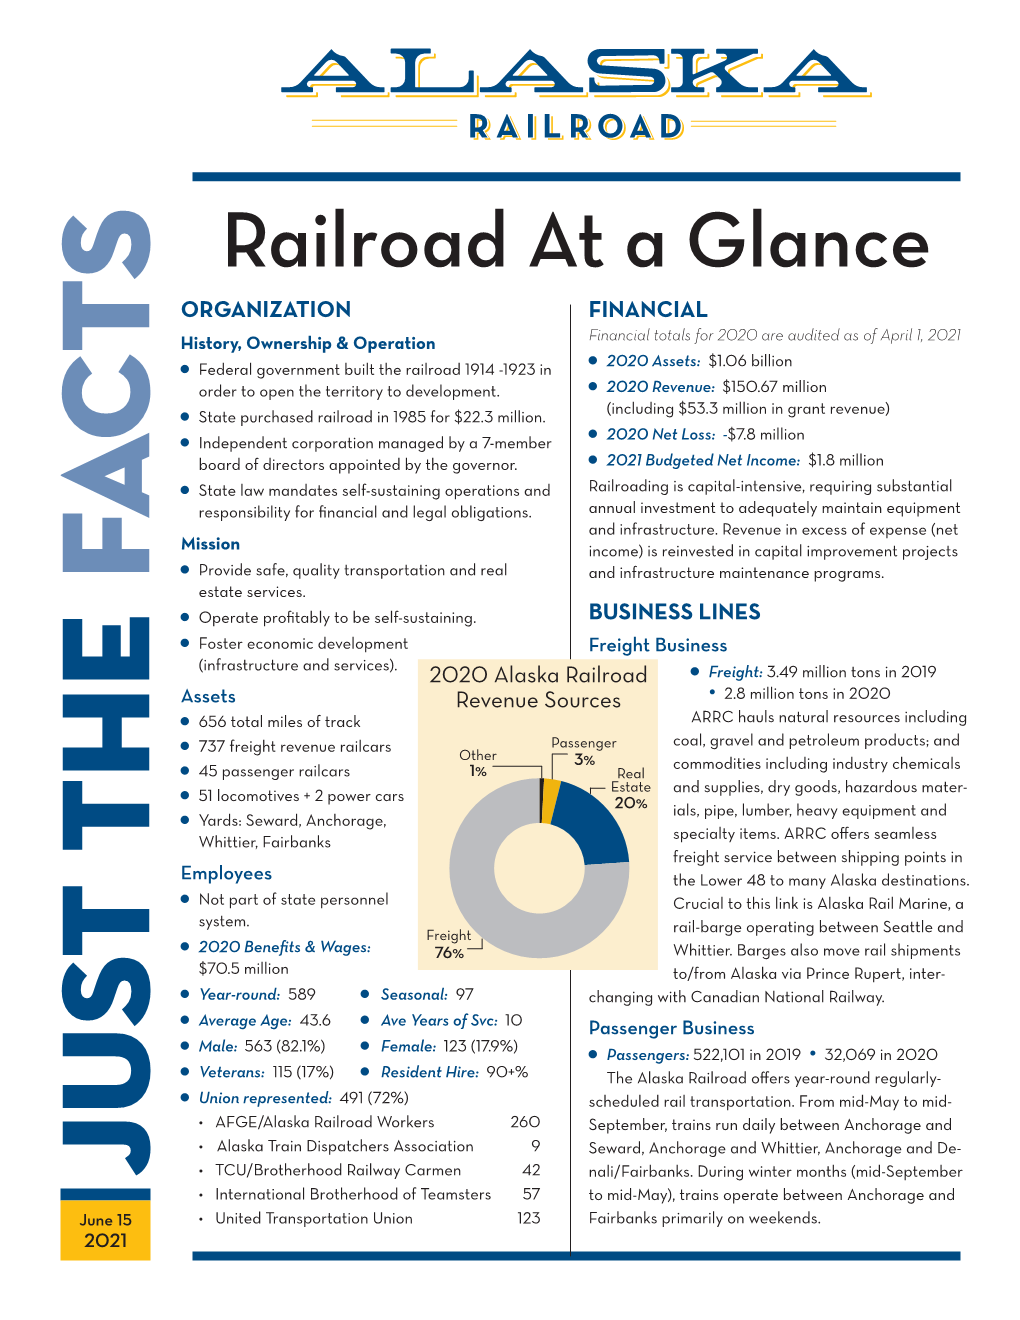 Railroad at a Glance